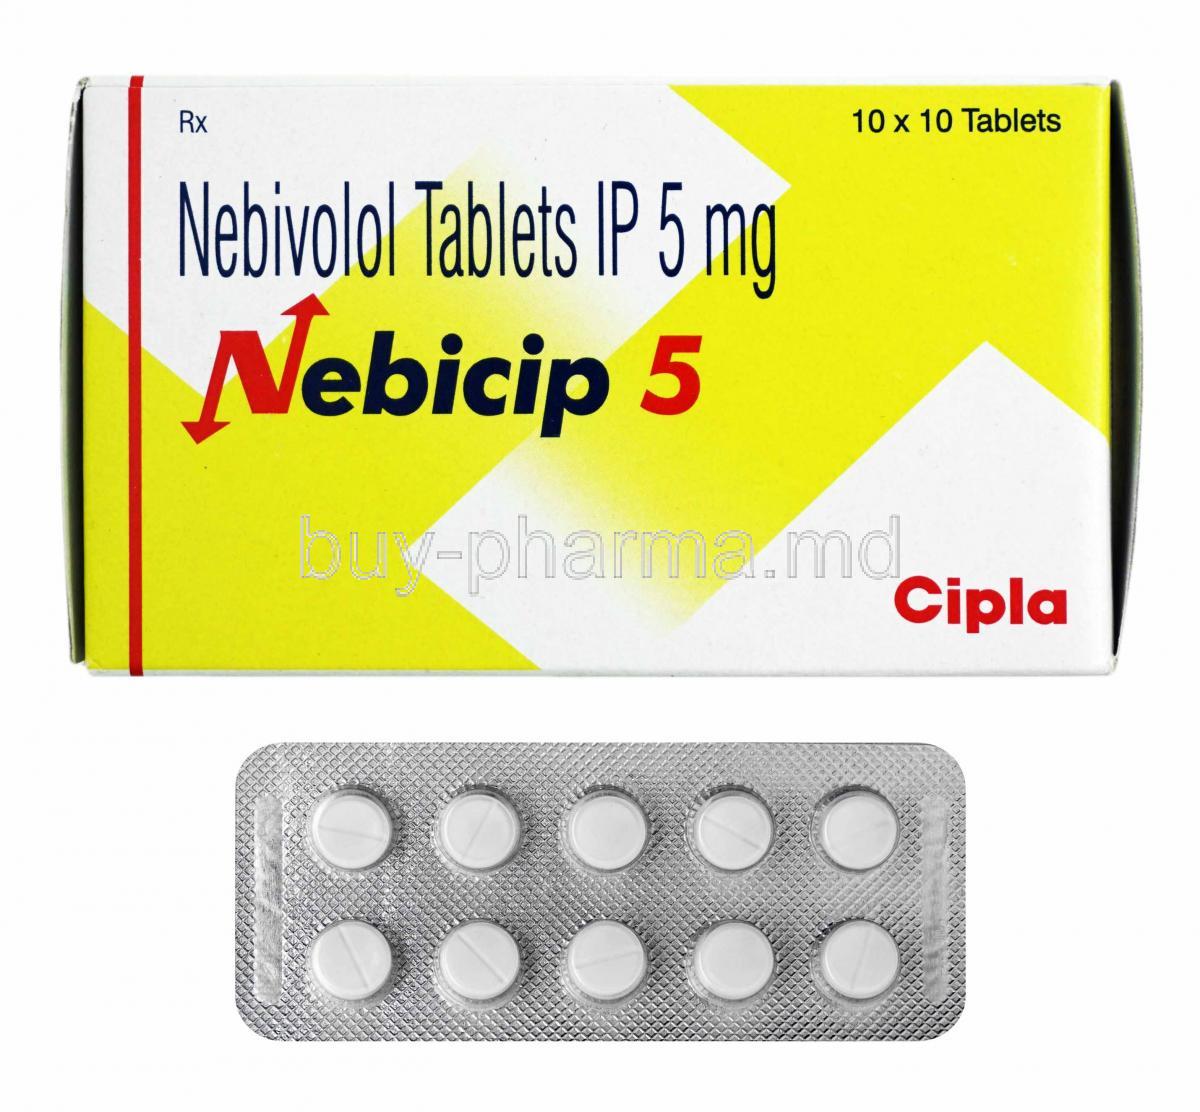 Nebicip, Nebivolol 5mg box and tablets